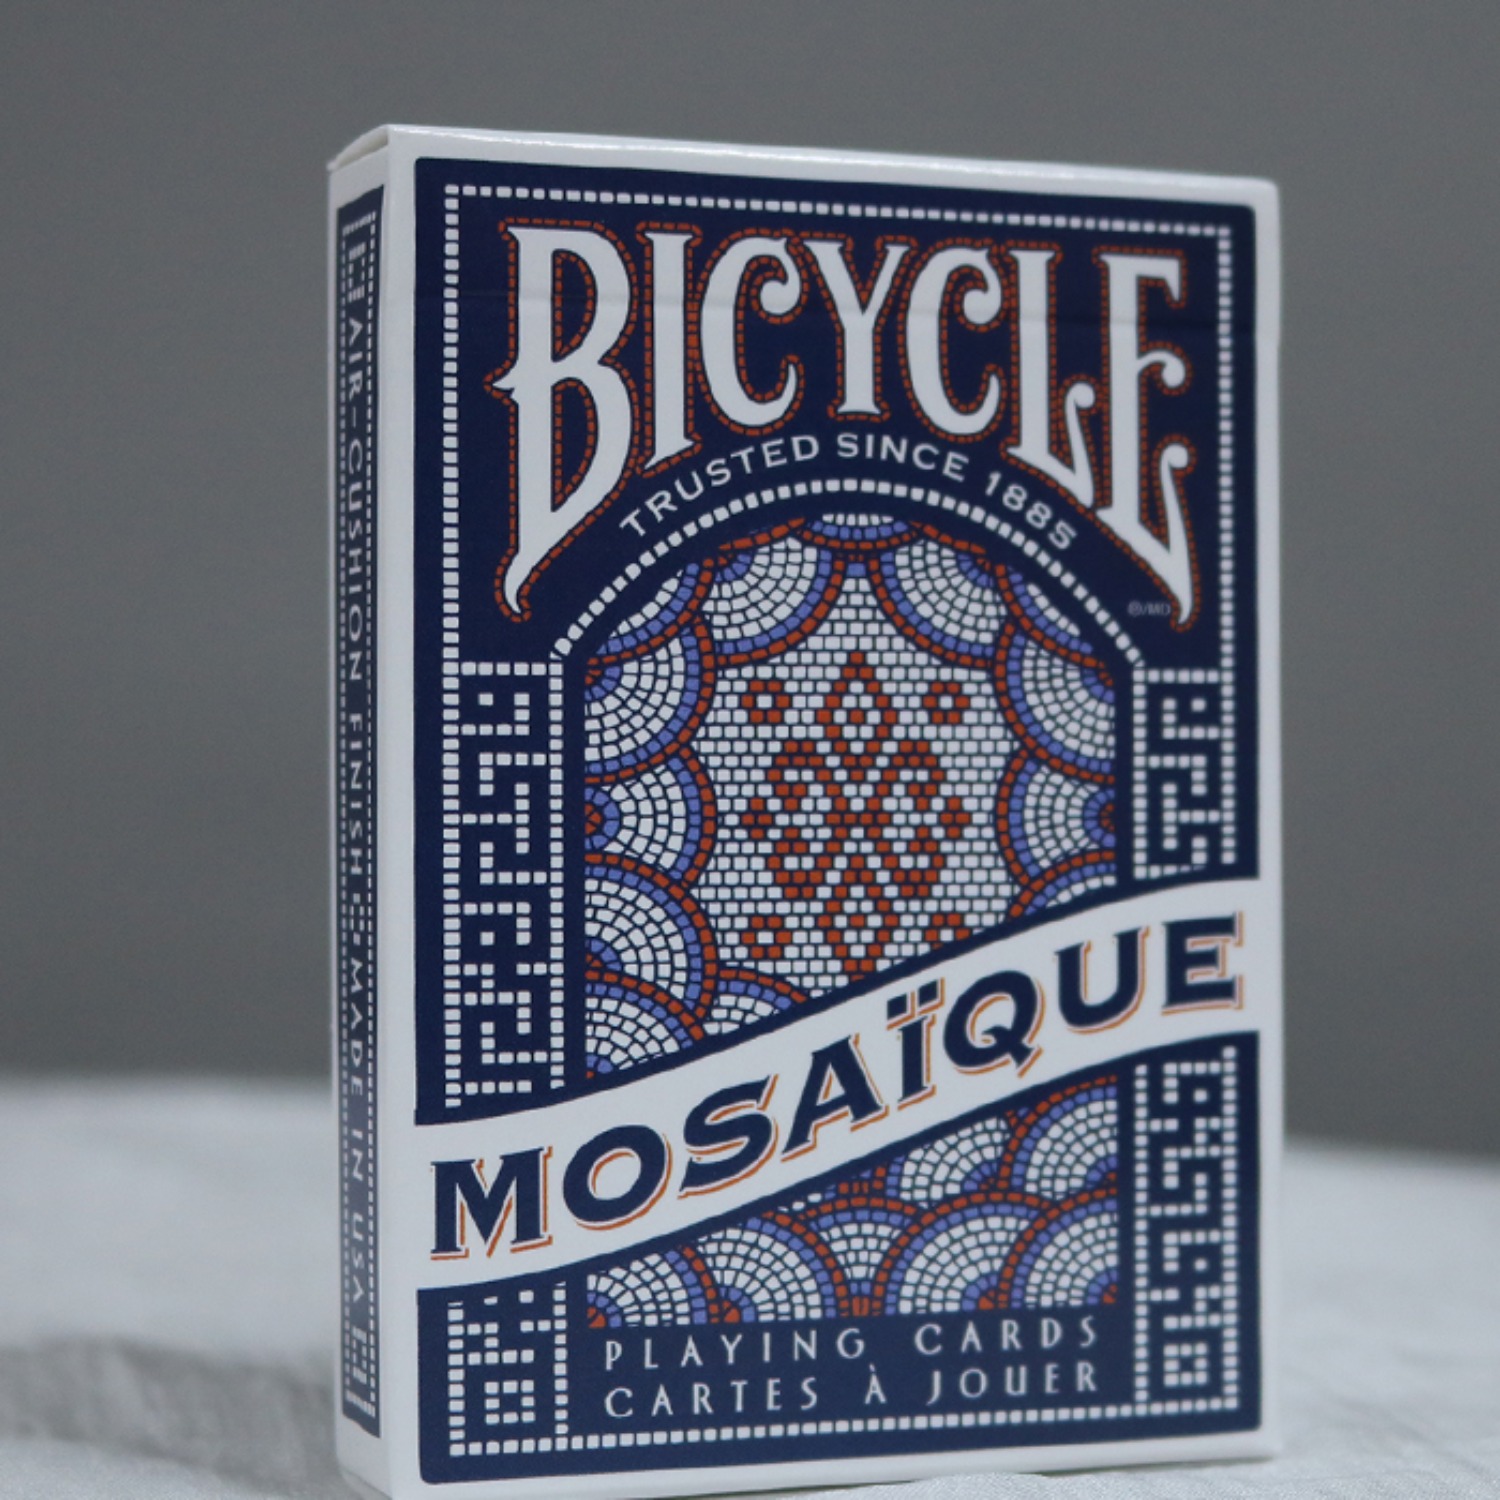 CA25 모자이크덱 Bicycle Mosaique